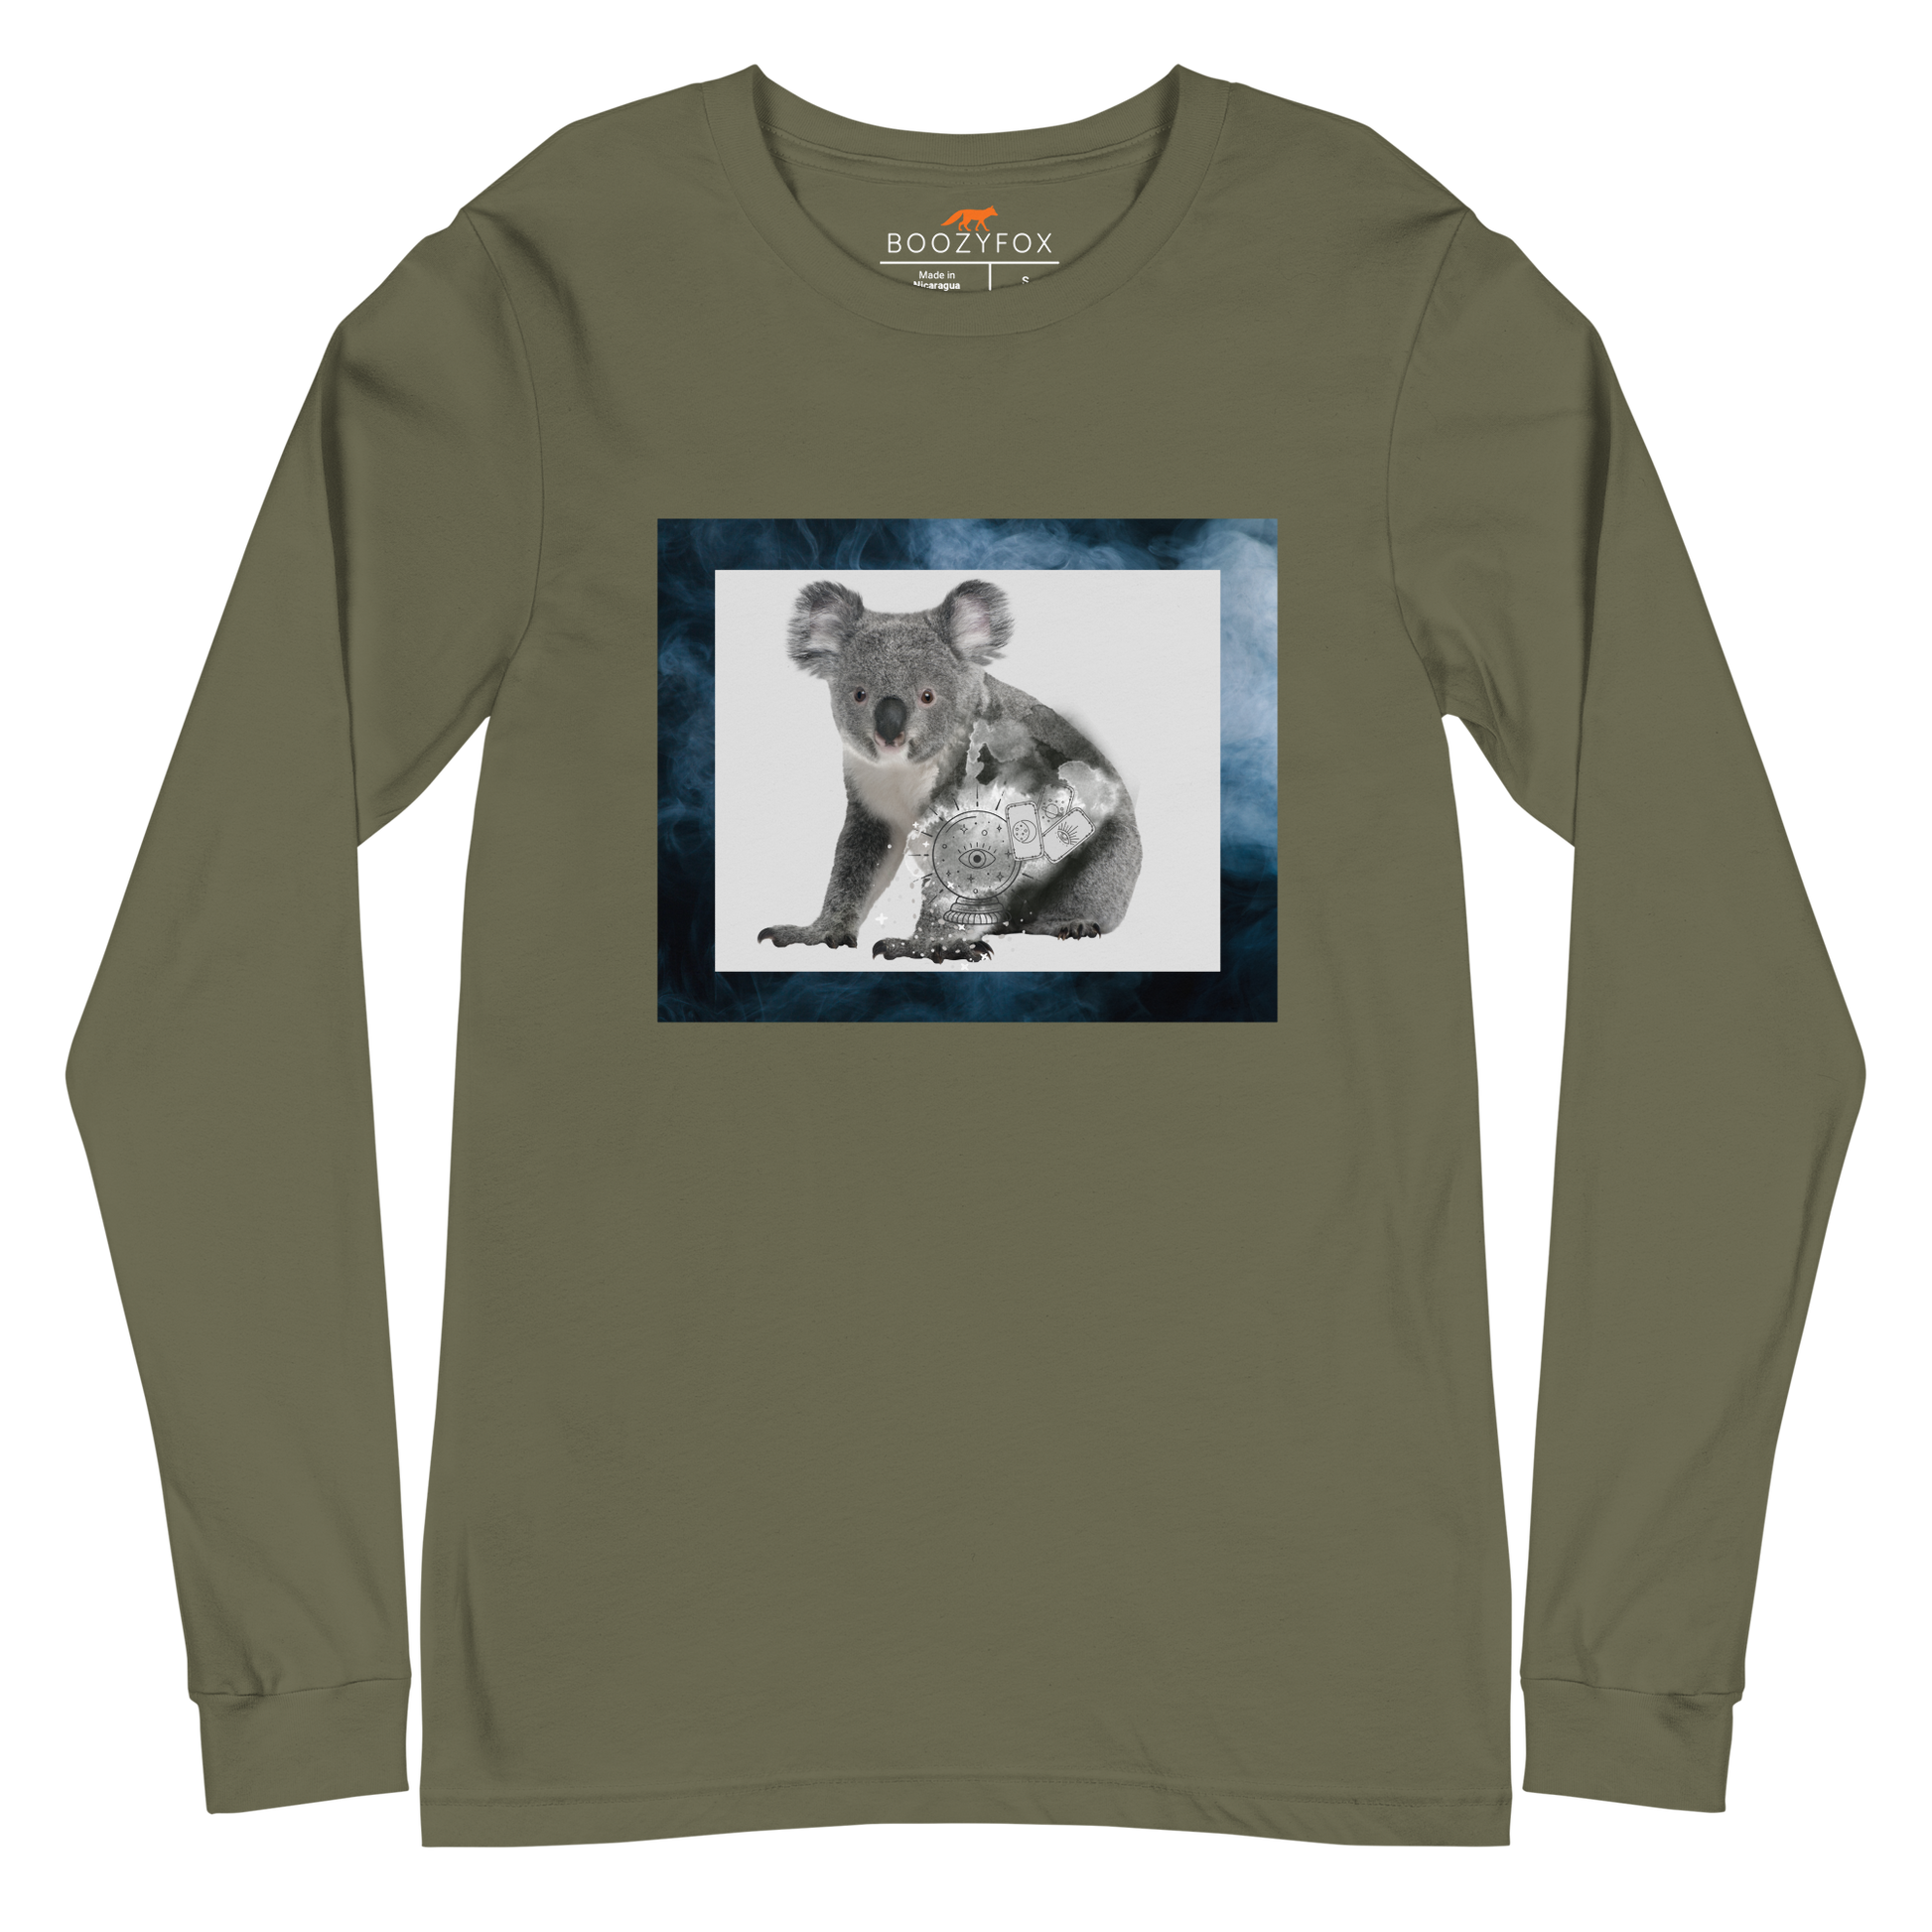 Military Green Koala Long Sleeve Tee featuring a Mystical Koala graphic on the chest - Cool Koala Long Sleeve Graphic Tees - Boozy Fox